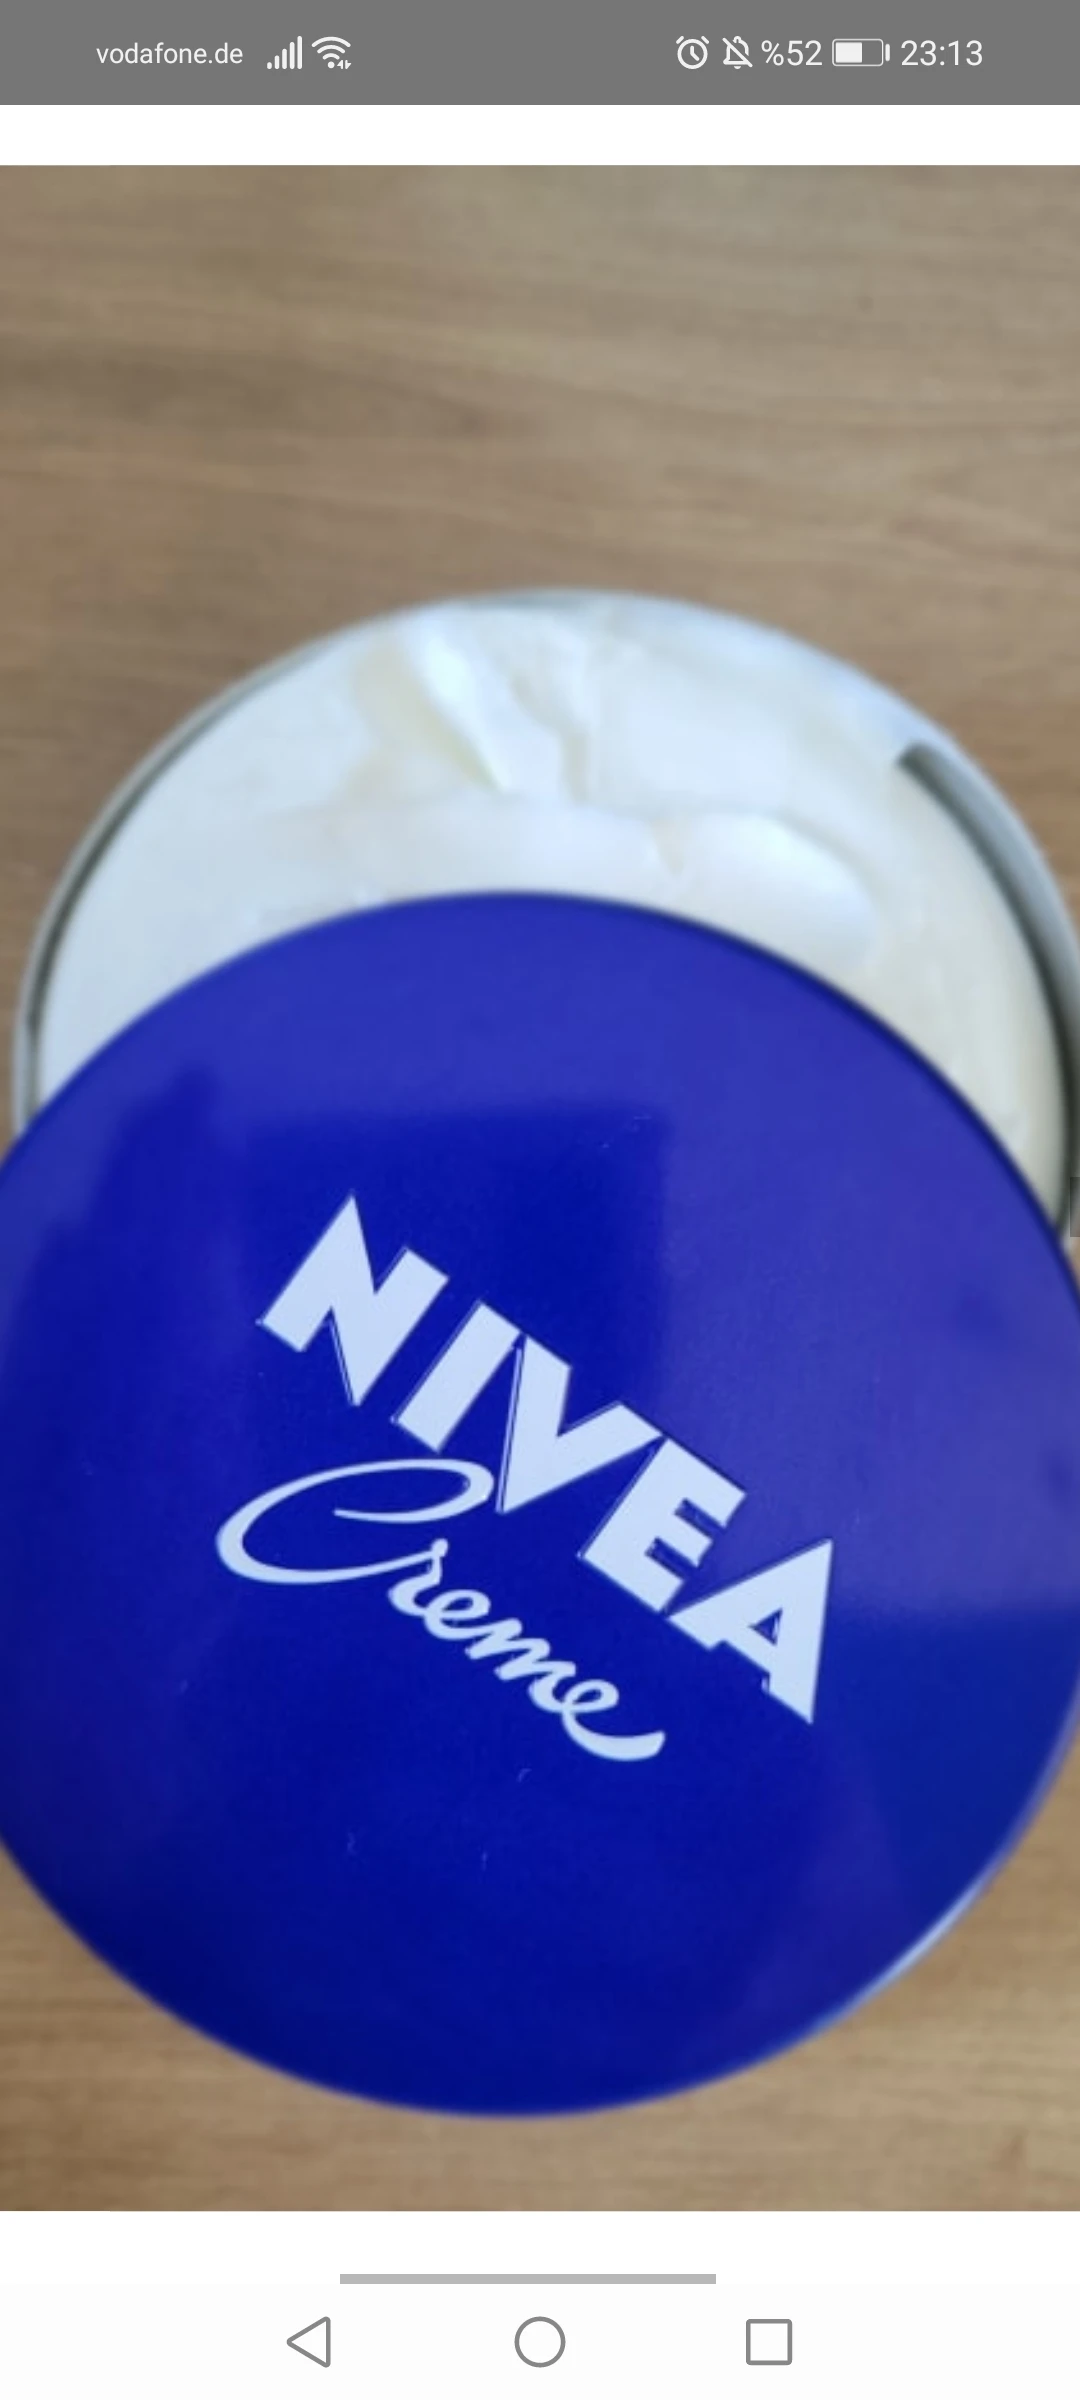 Nivea - Creme - Intense Cream - review image